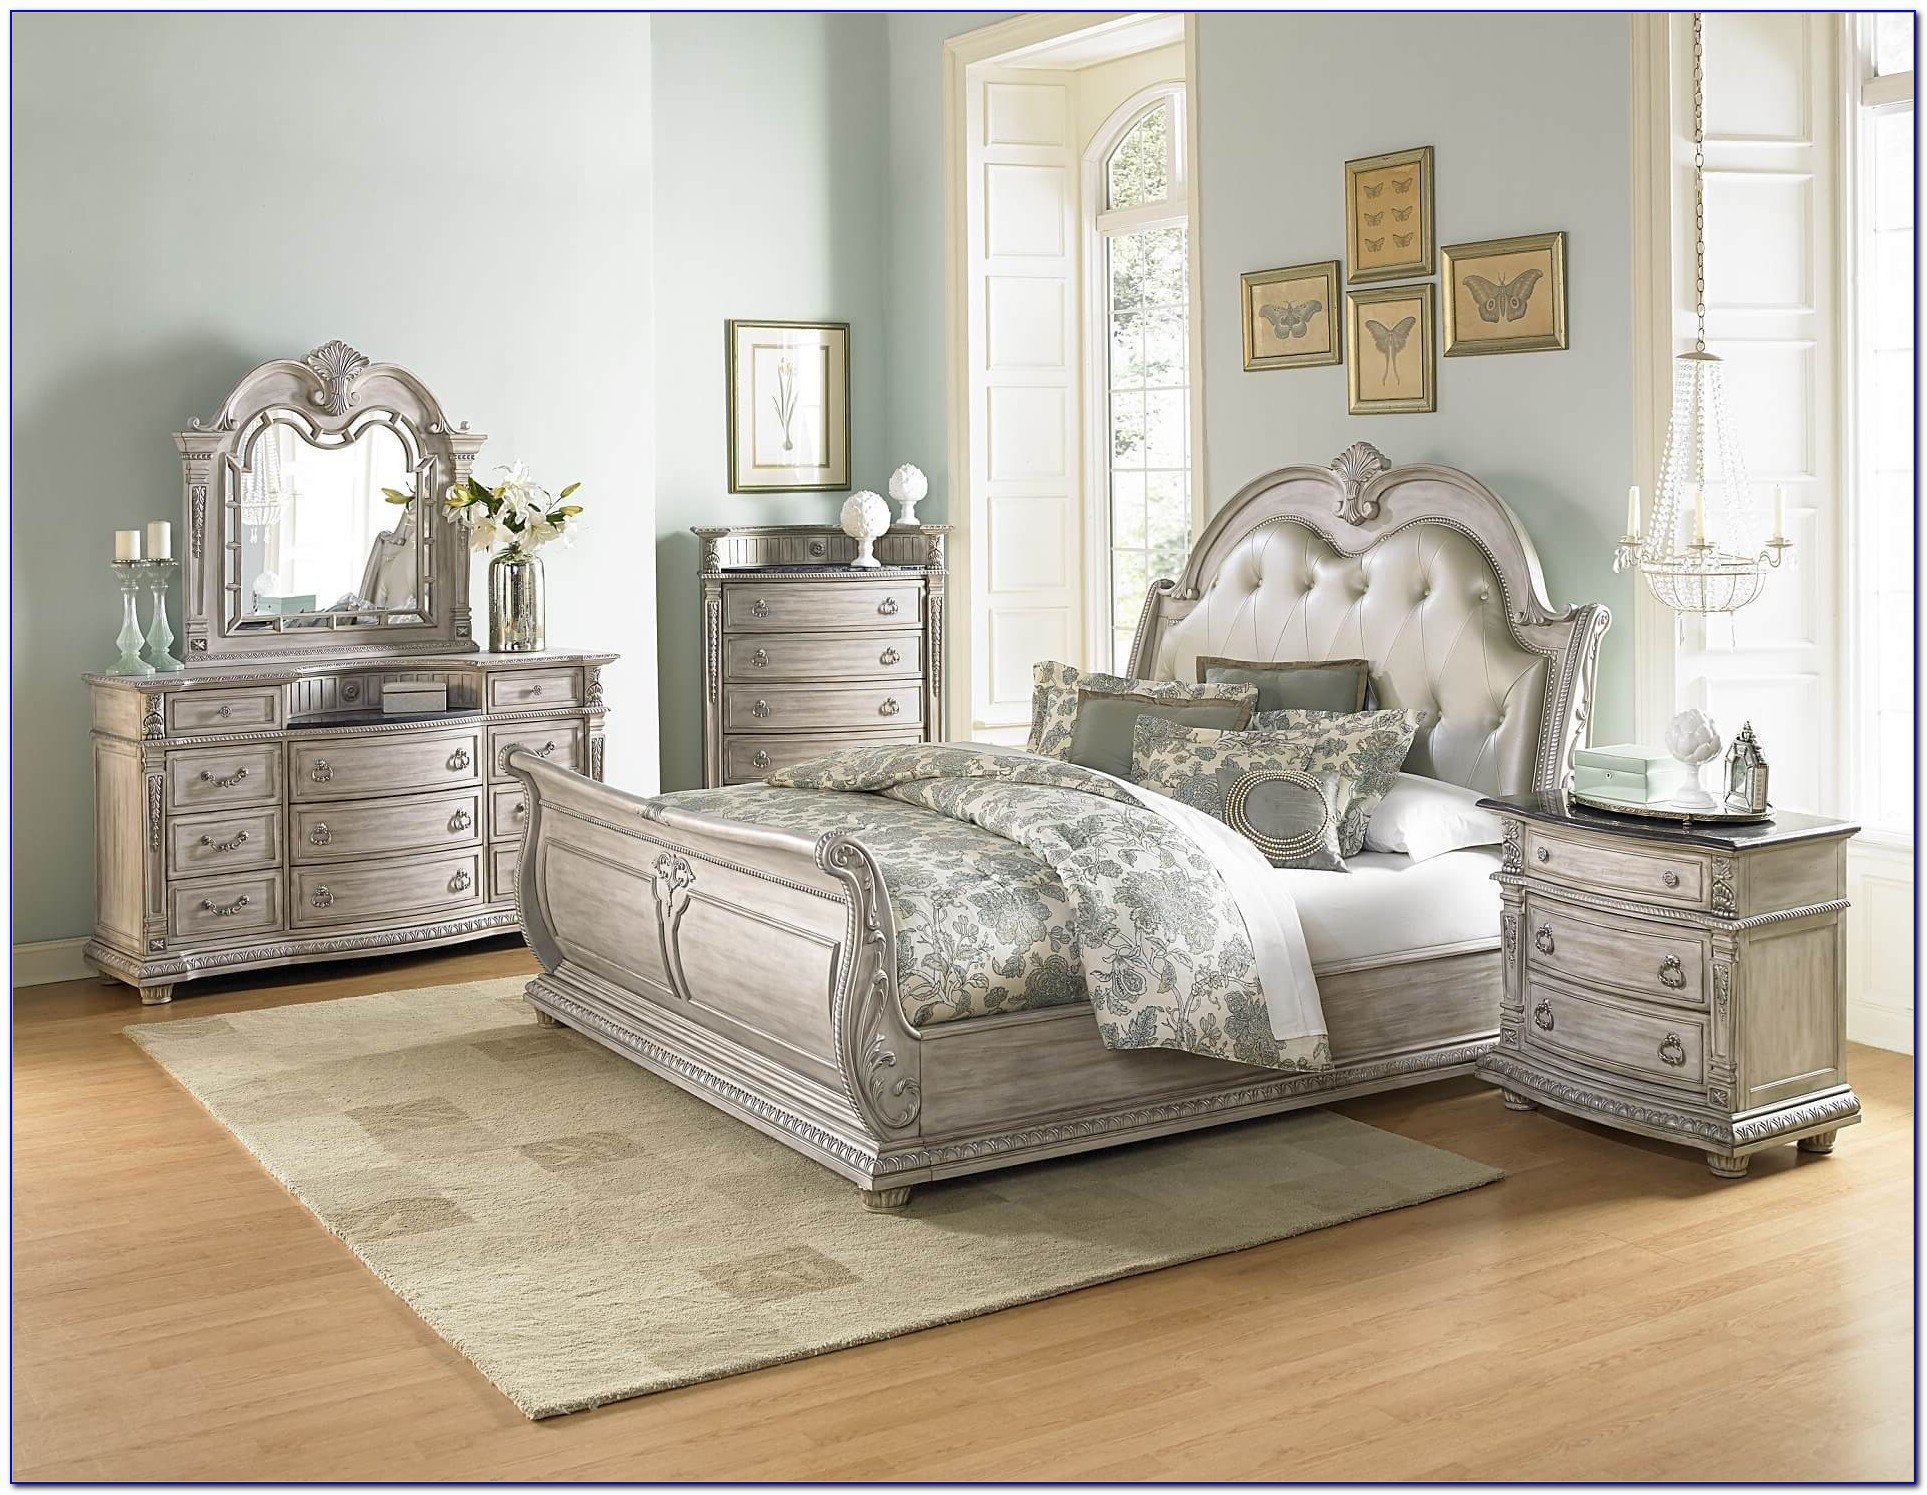 kathy ireland collection bedroom furniture